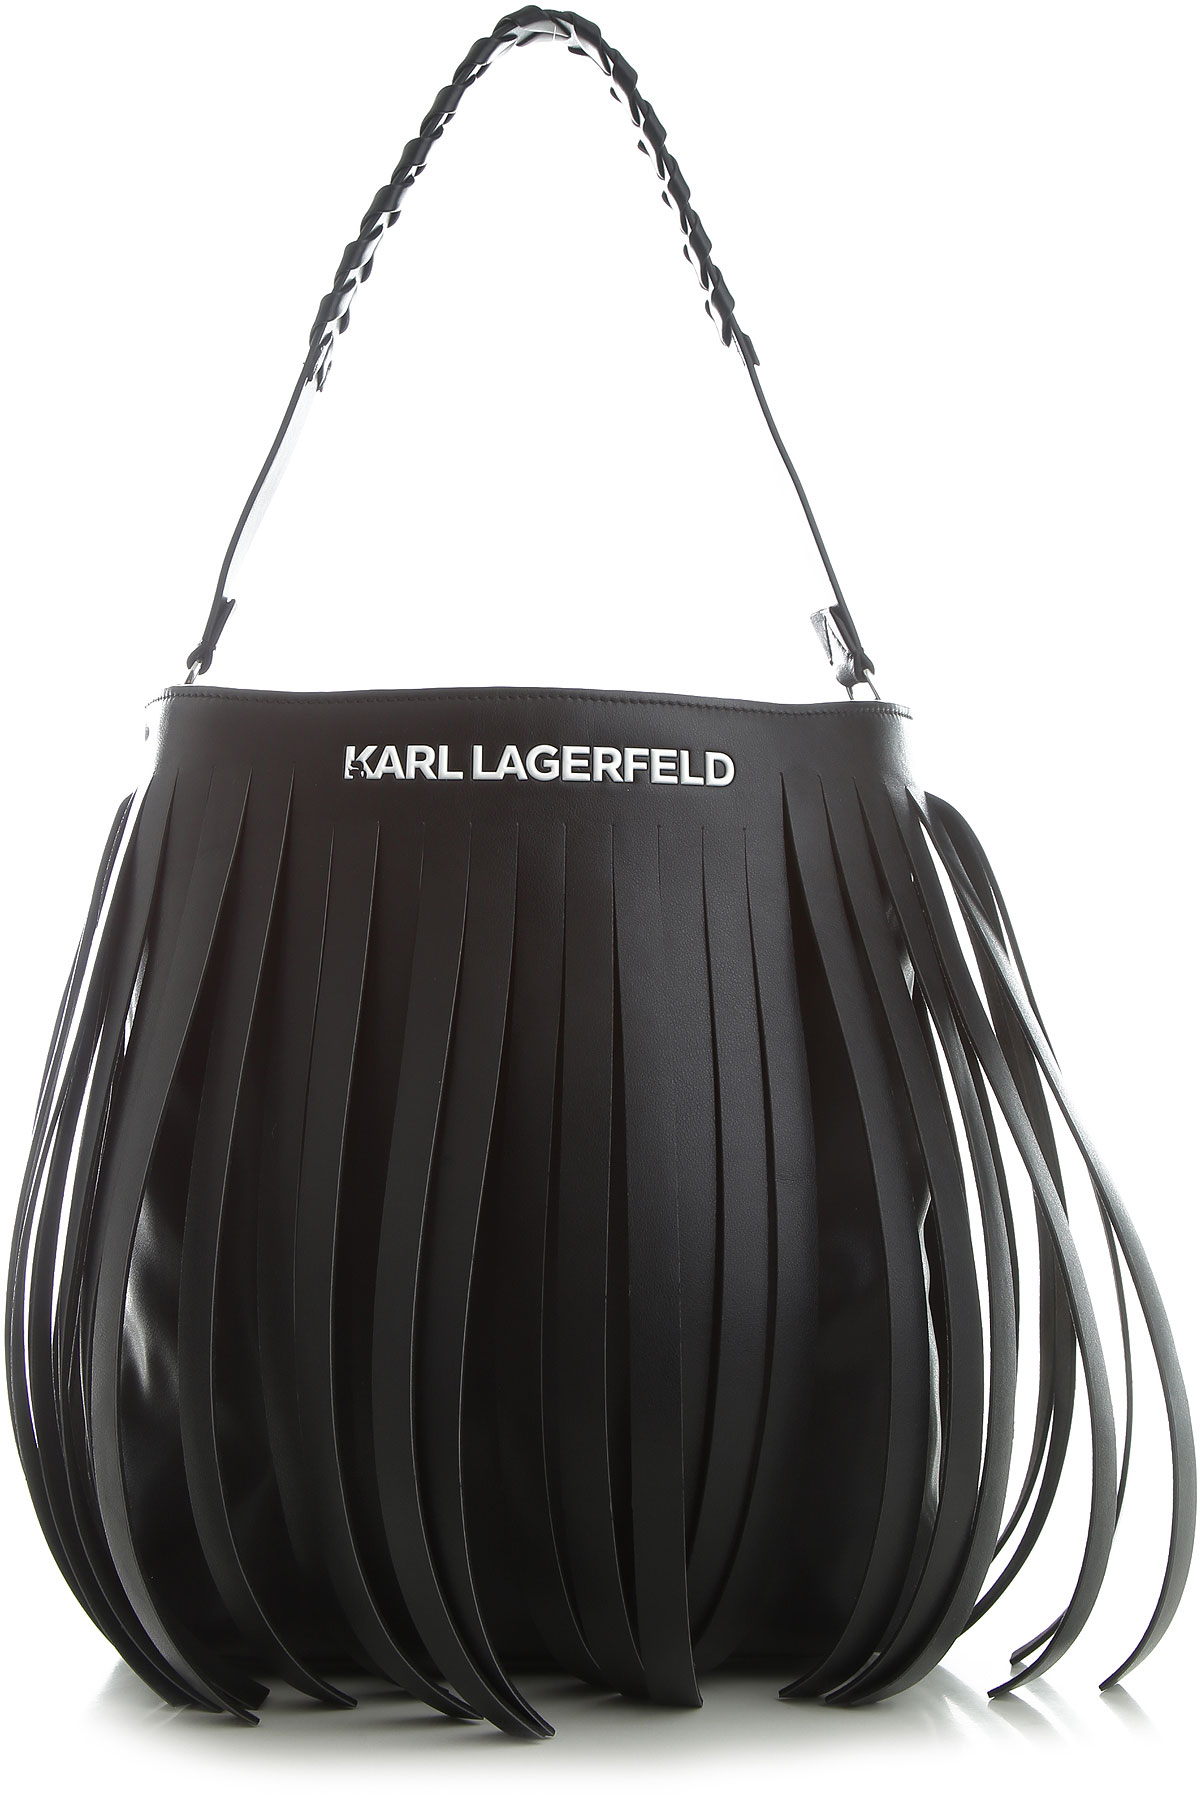 Handbags Karl Lagerfeld, Style code: 216w3049-a620